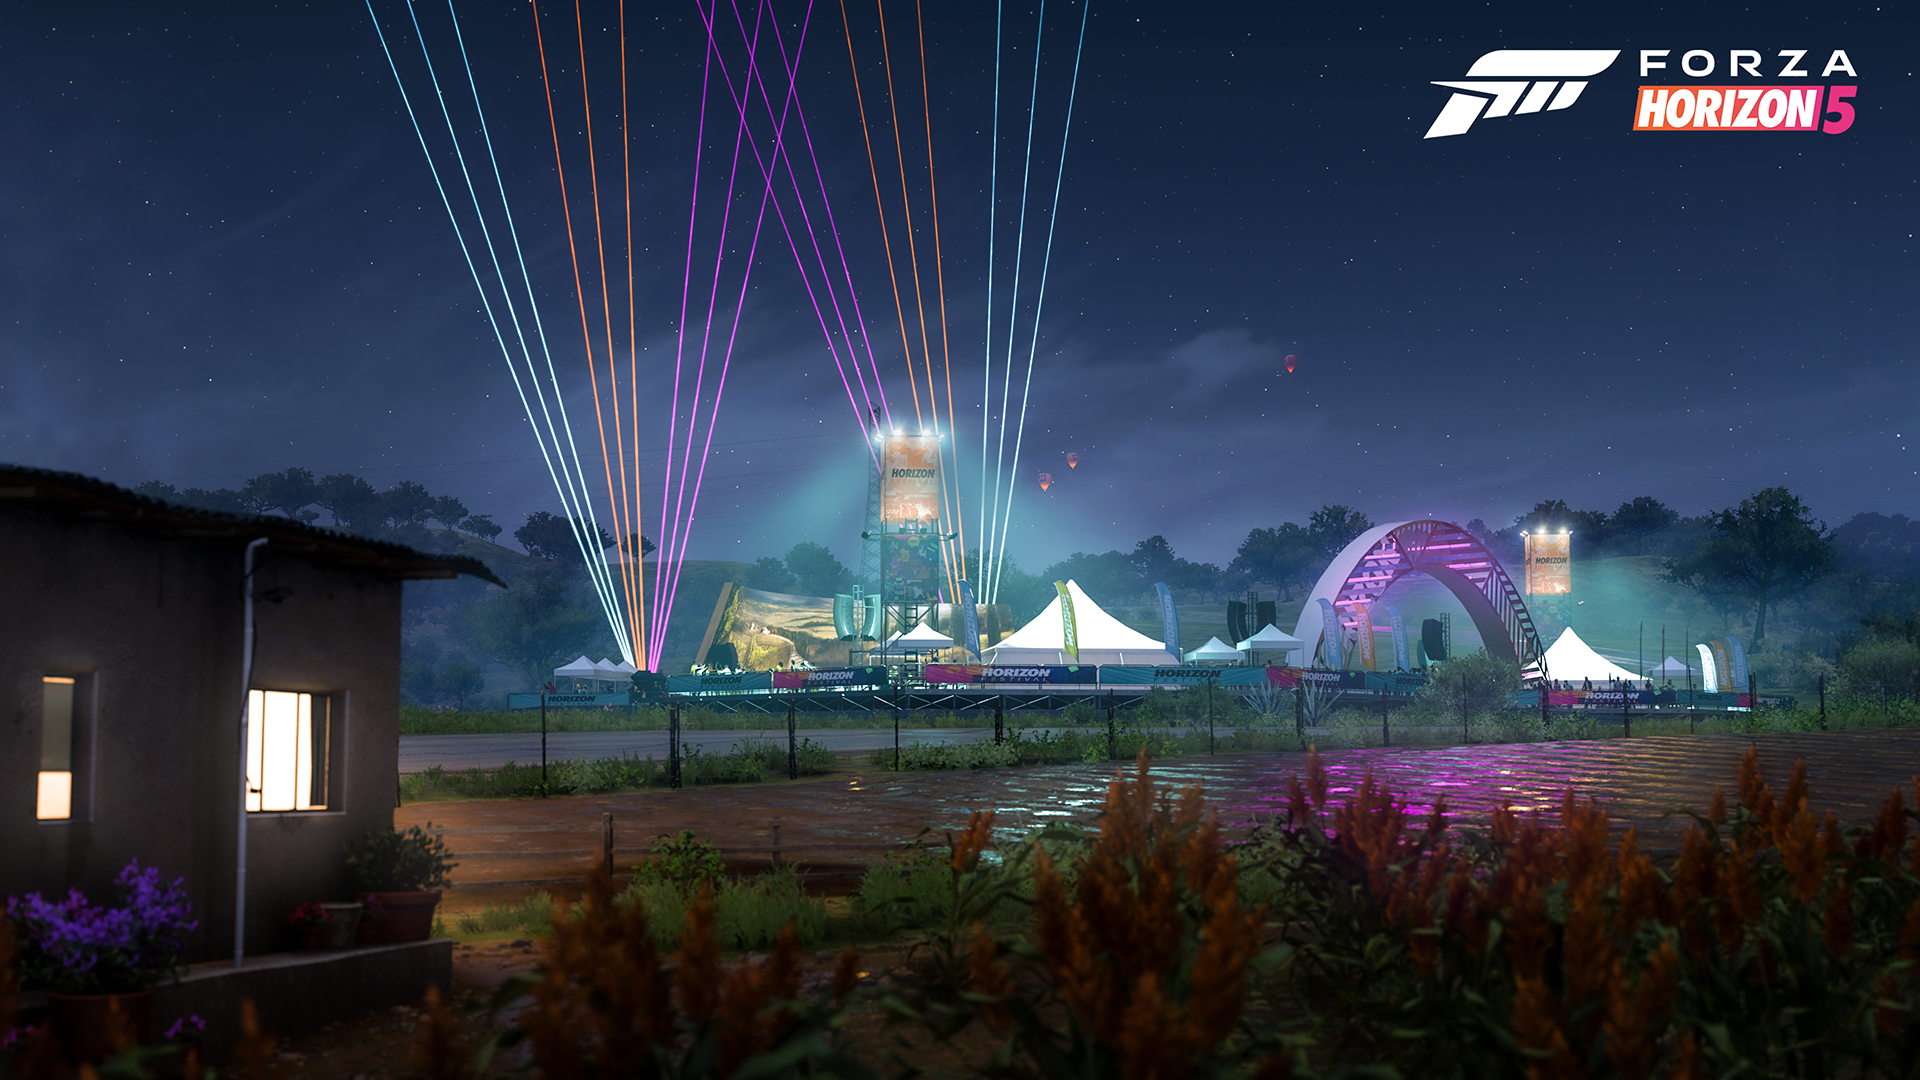 Forza Horizon 2 Demo Release Set, Achievements Listed - SlashGear